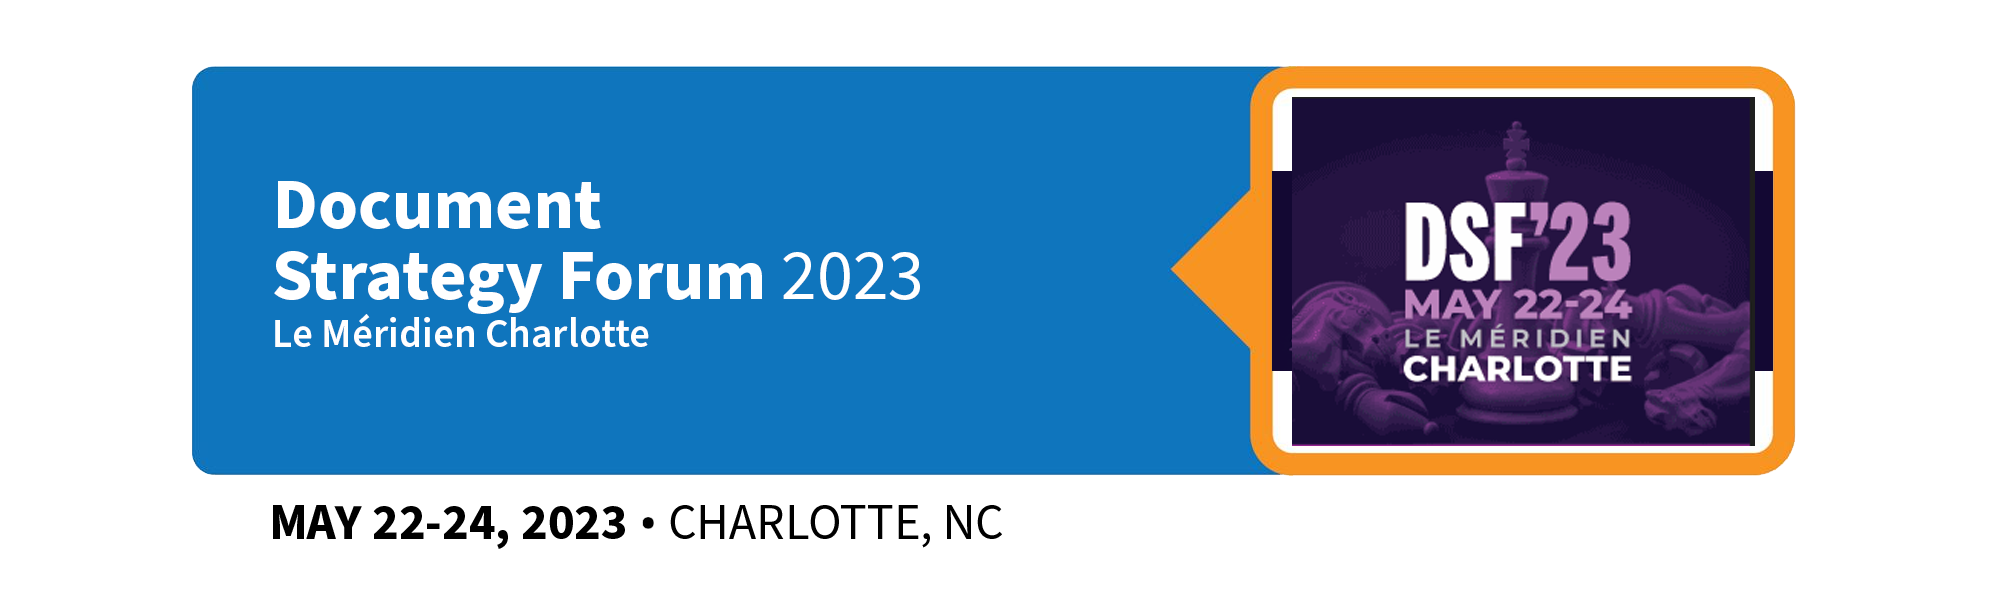 2023 Document Strategy Forum